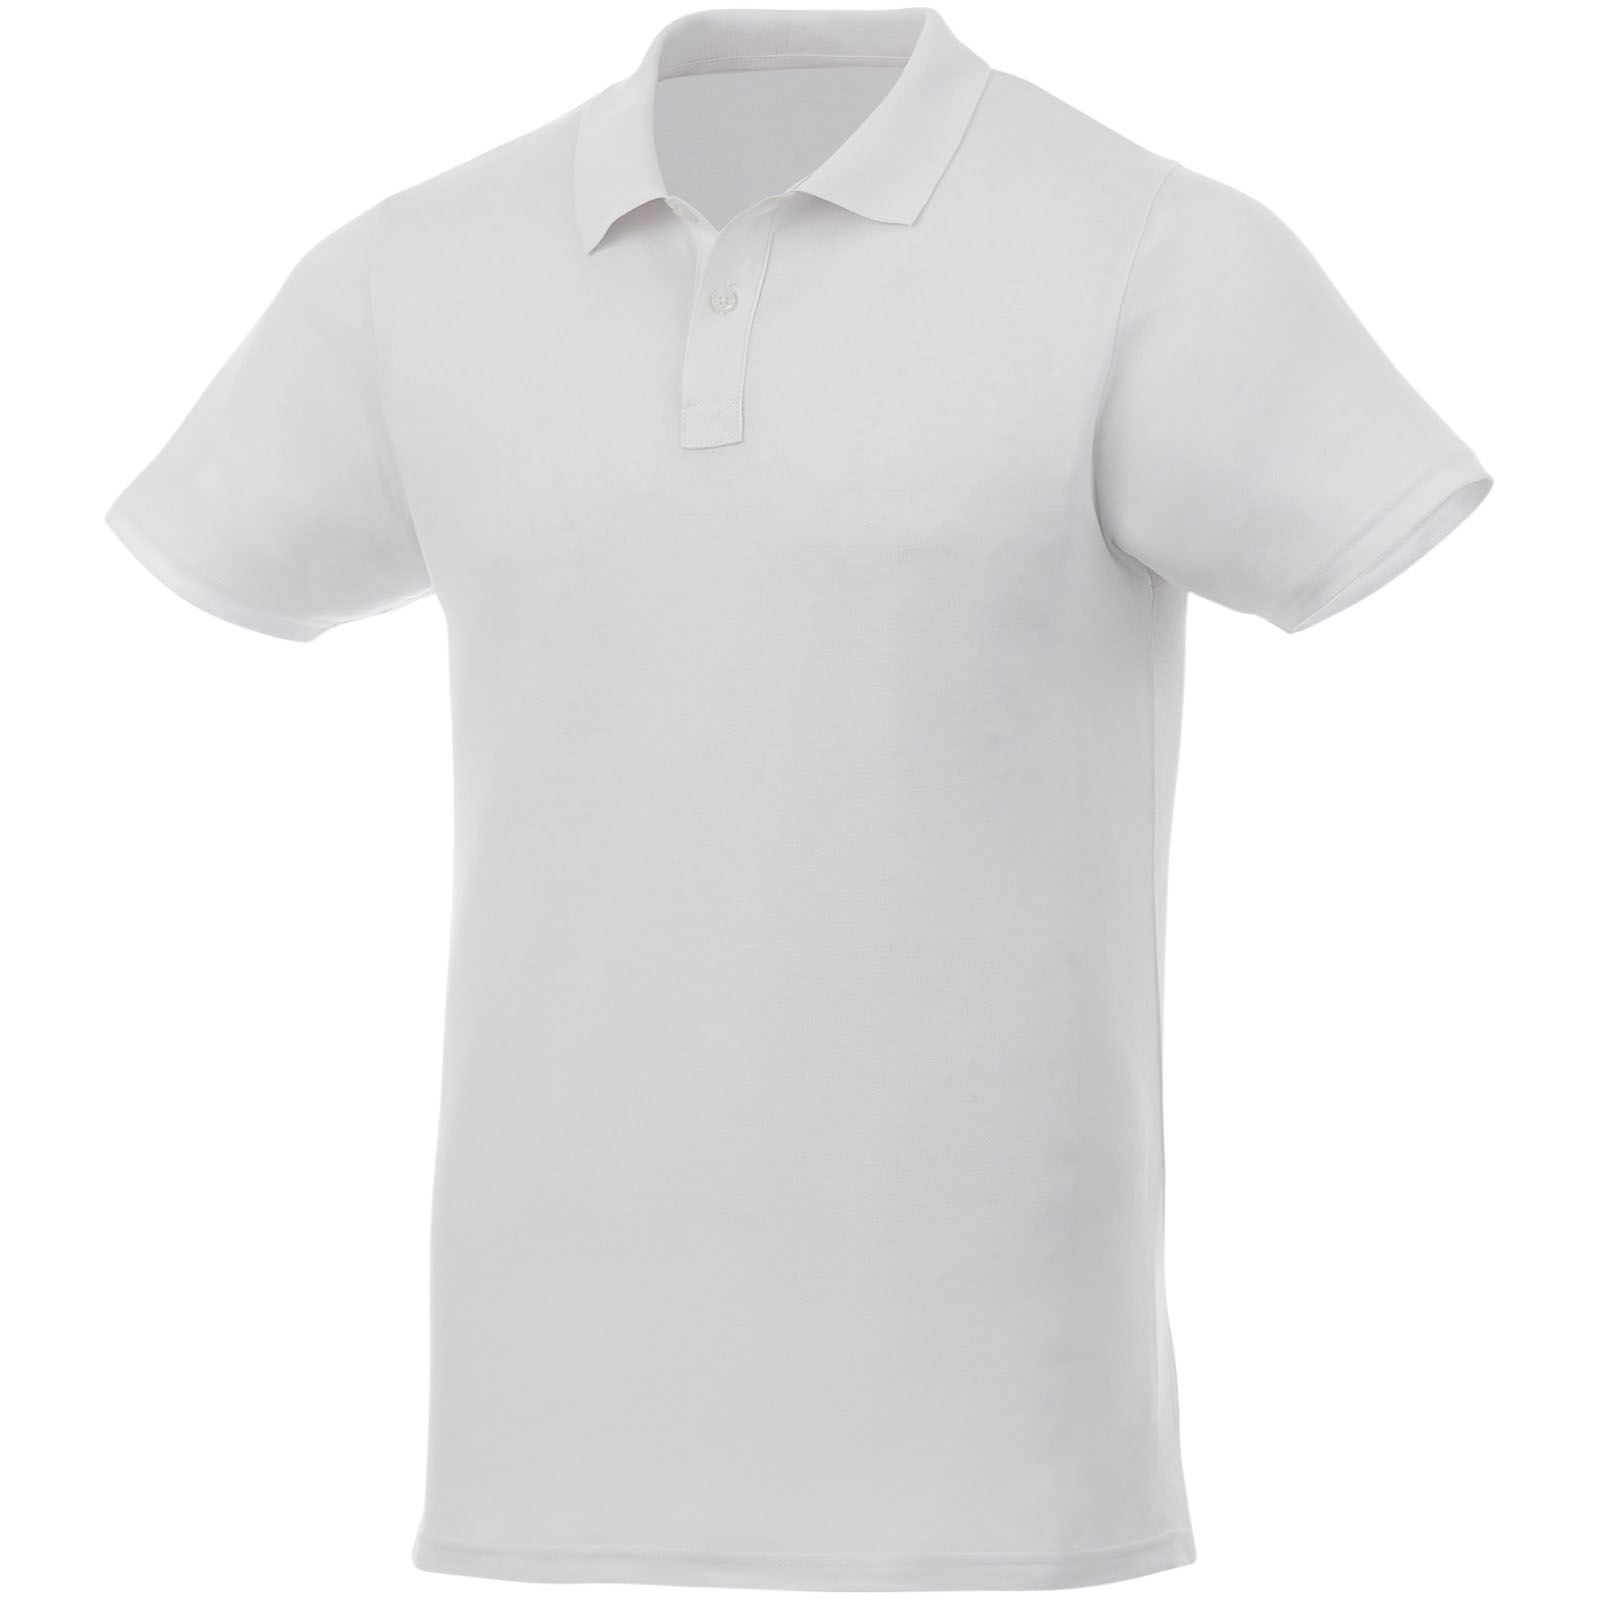 Polo Shirt with Custom Label - Shipton Under Wychwood - Bourne End